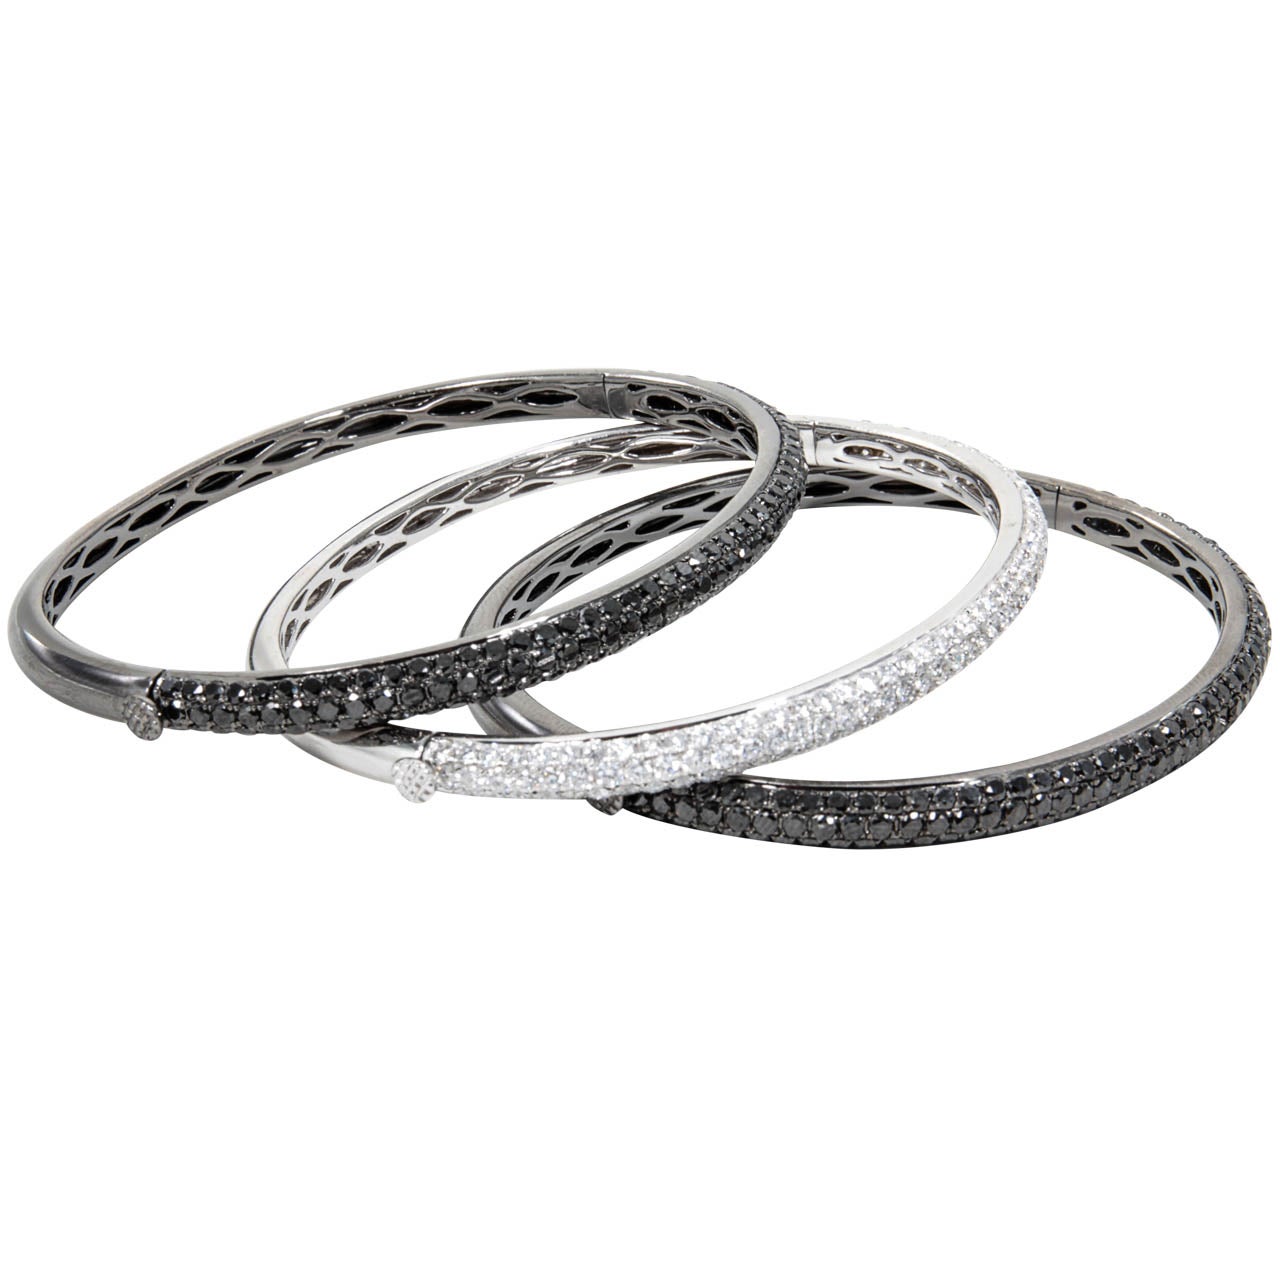 Set of Black and White Diamond Bangle Bracelets